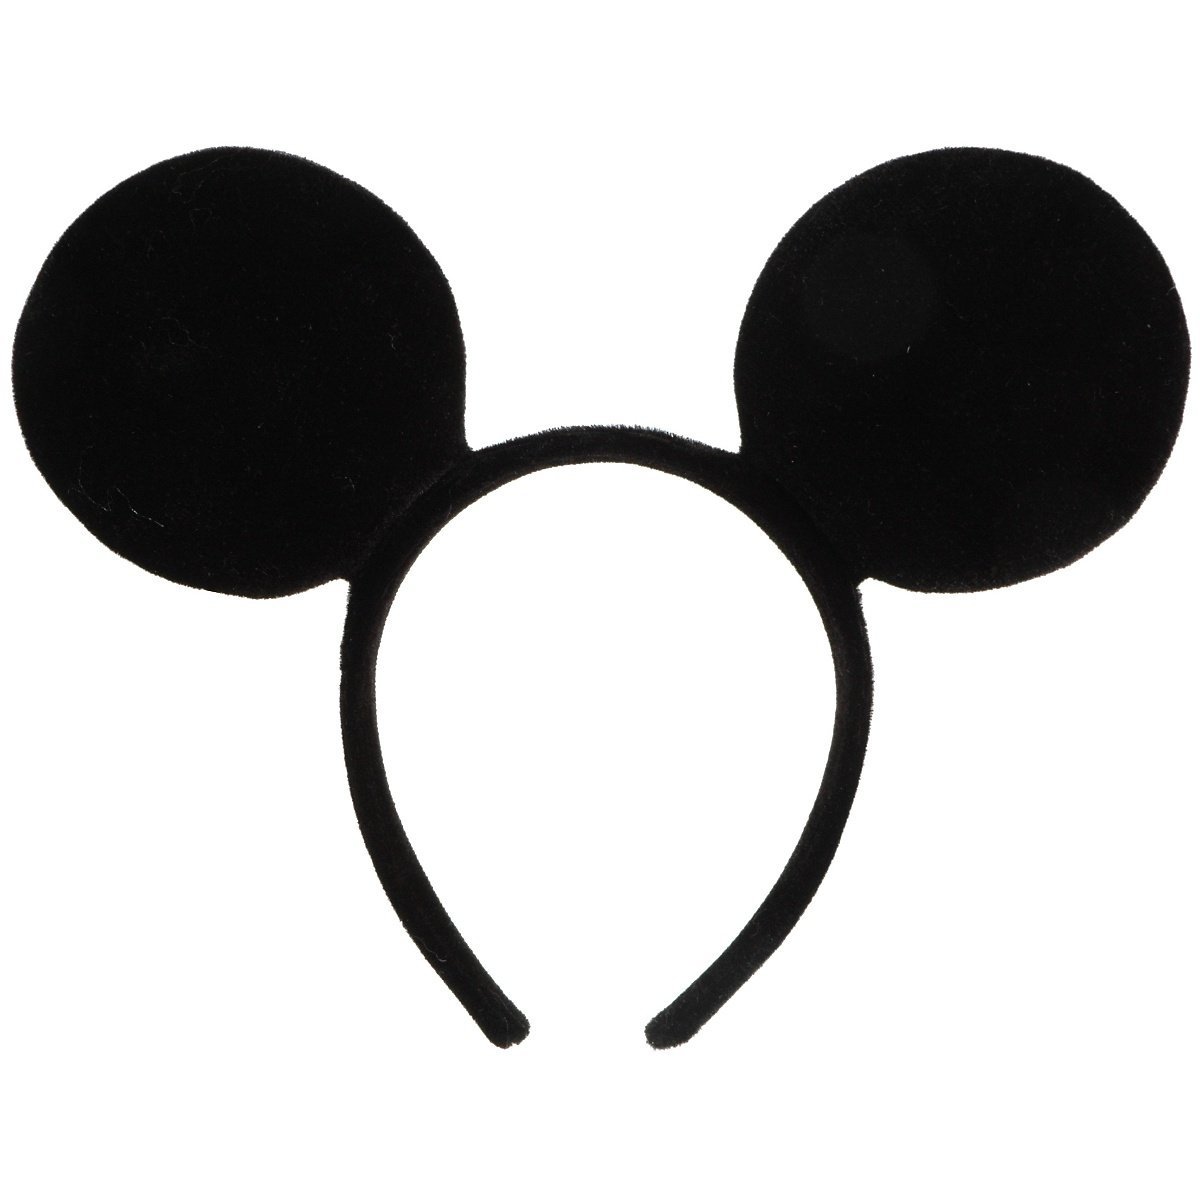 Amazon.com: Hanover Accessories 160977 Disney Mickey Mouse Ears ...